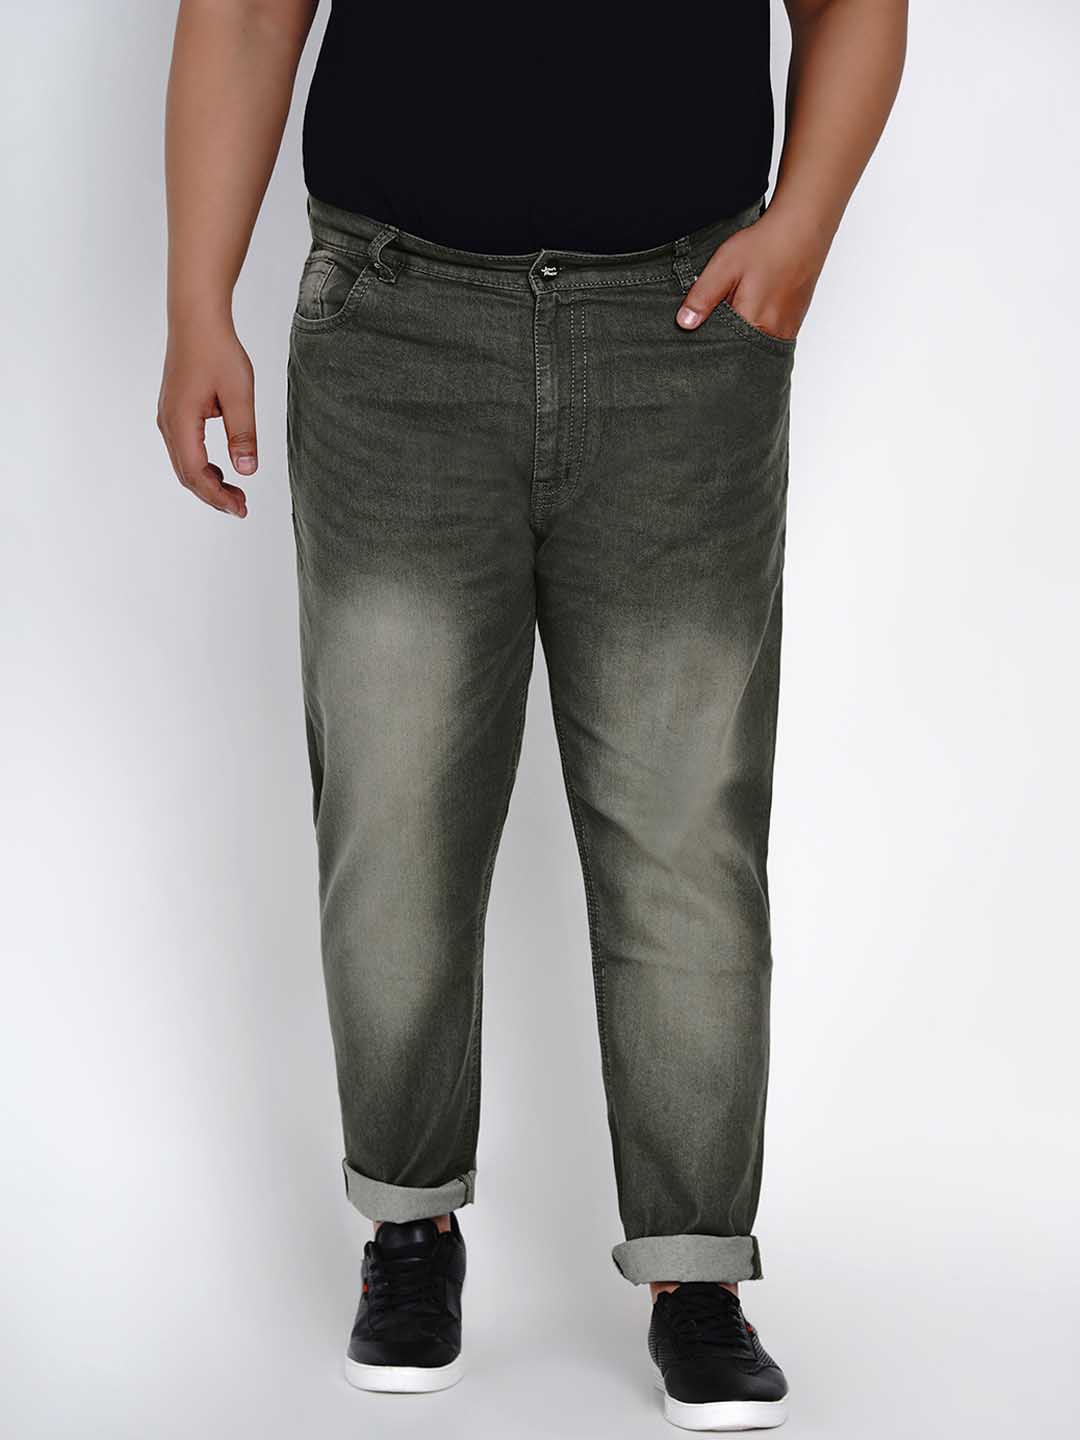 affordables/jeans/JPJ2003A/jpj2003a-2.jpg